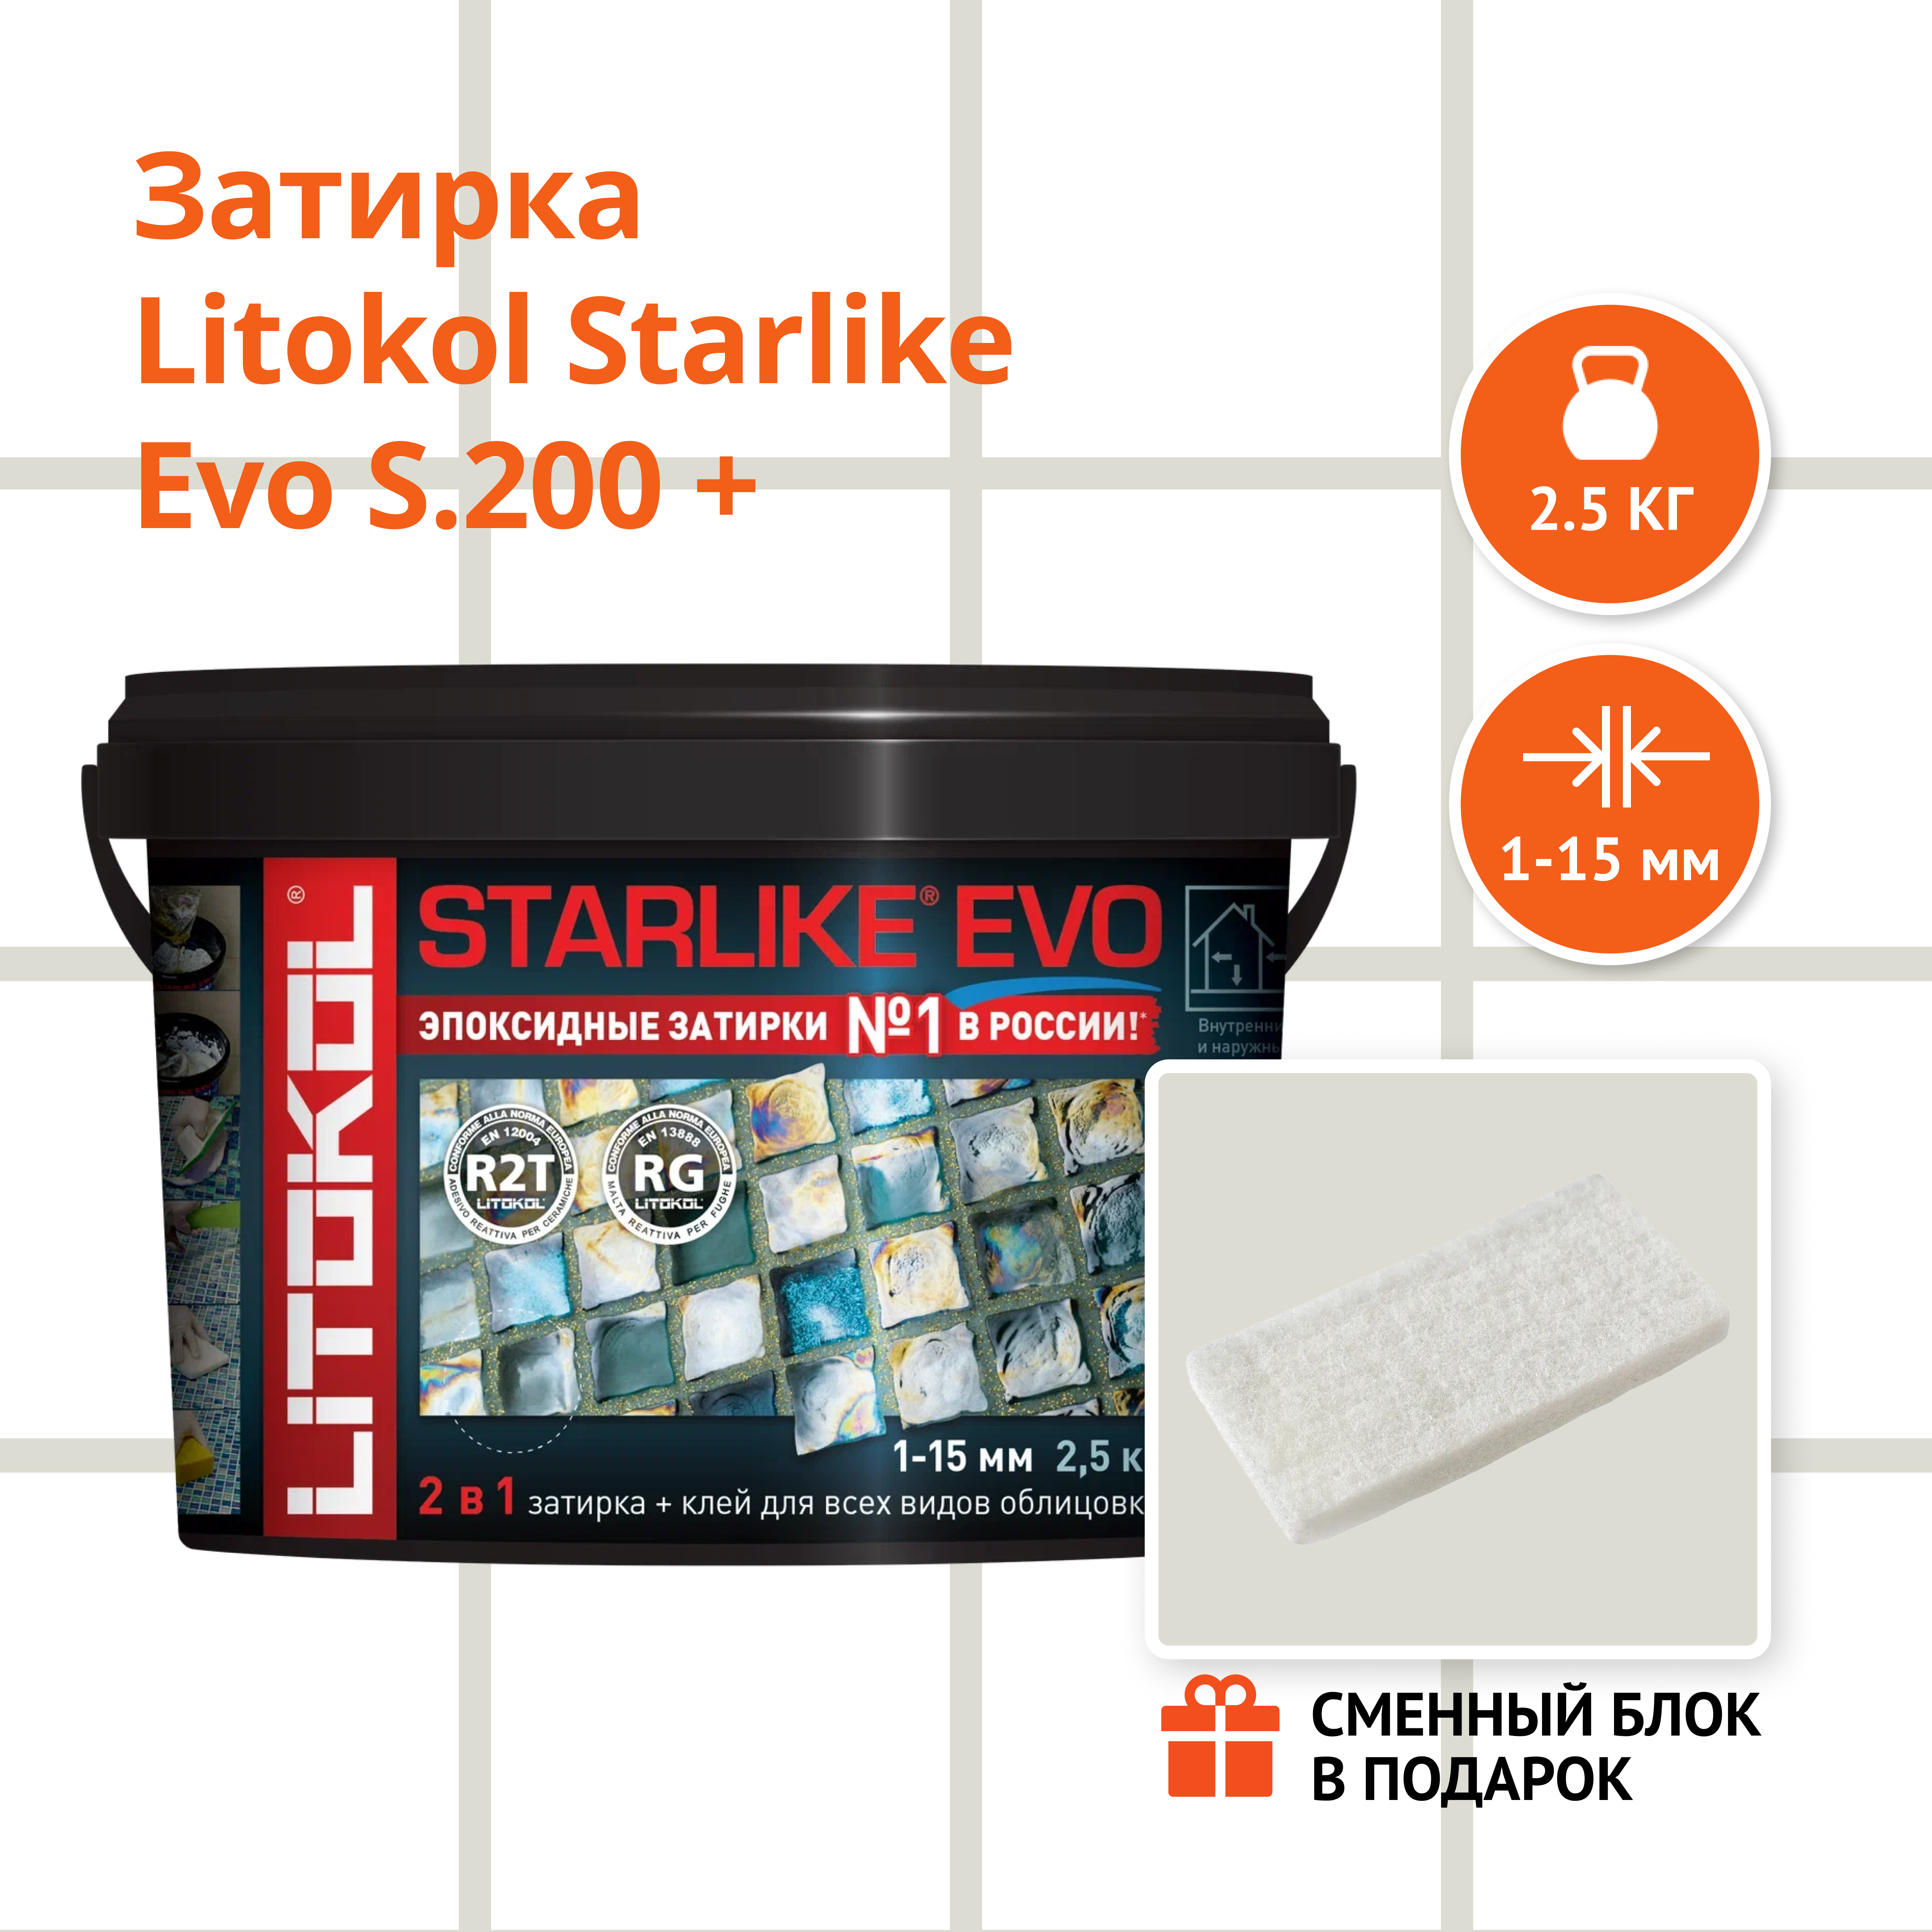 Затирка LITOKOL STARLIKE EVO S.200 AVORIO 2.5 кг + Сменный блок в подарок